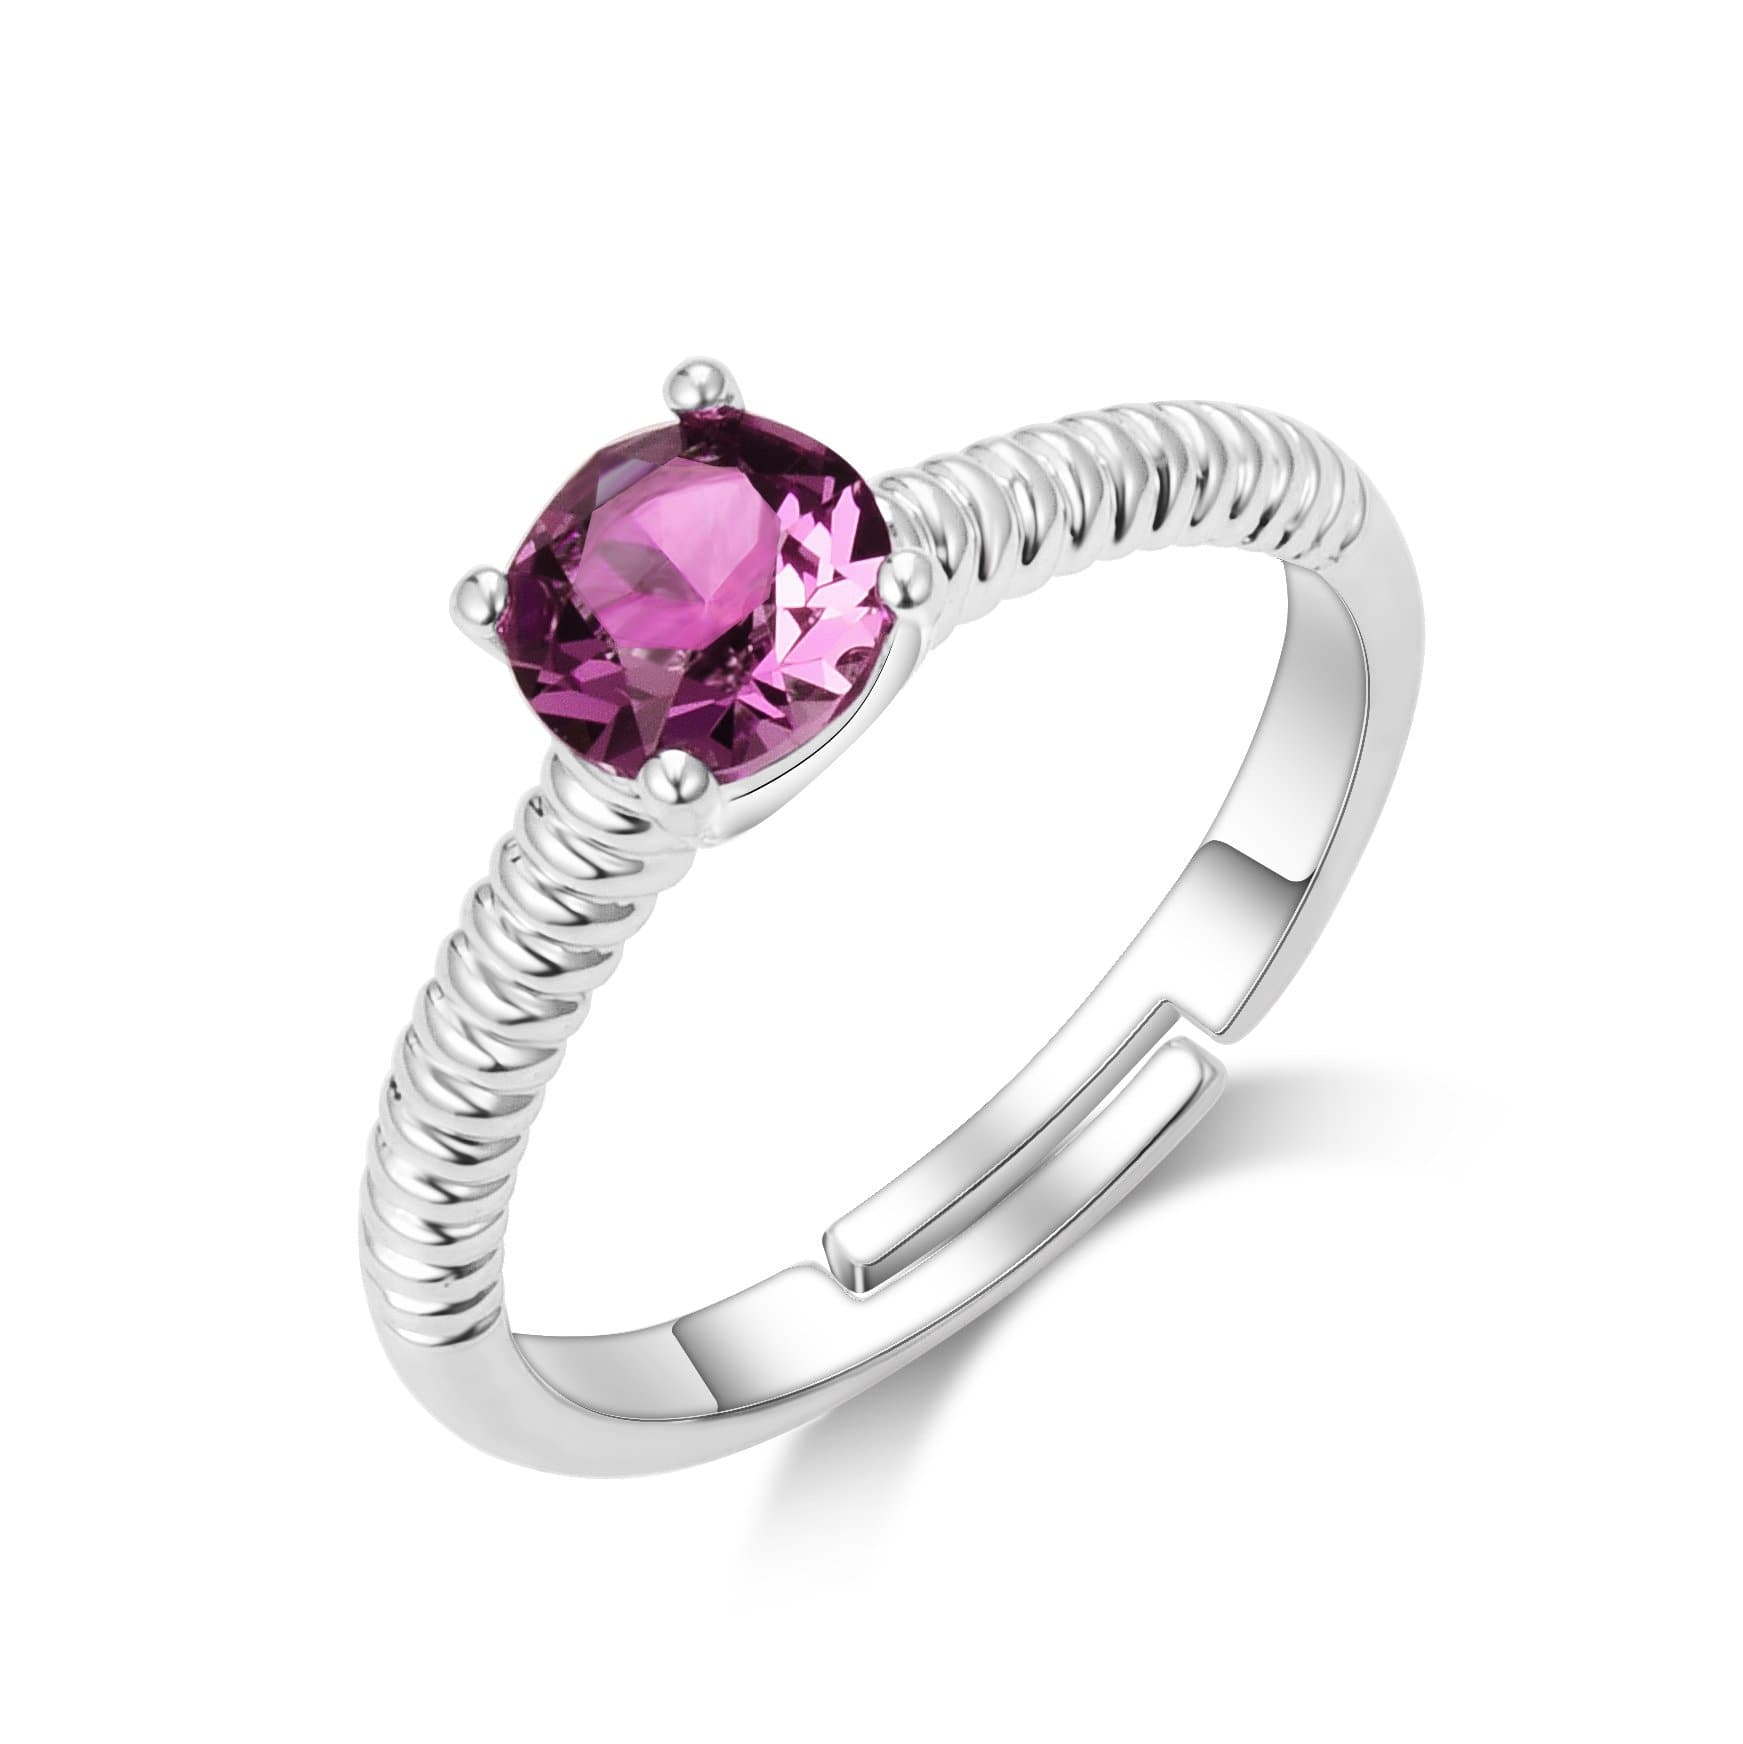 Purple Adjustable Crystal Ring Created with Zircondia® Crystals by Philip Jones Jewellery